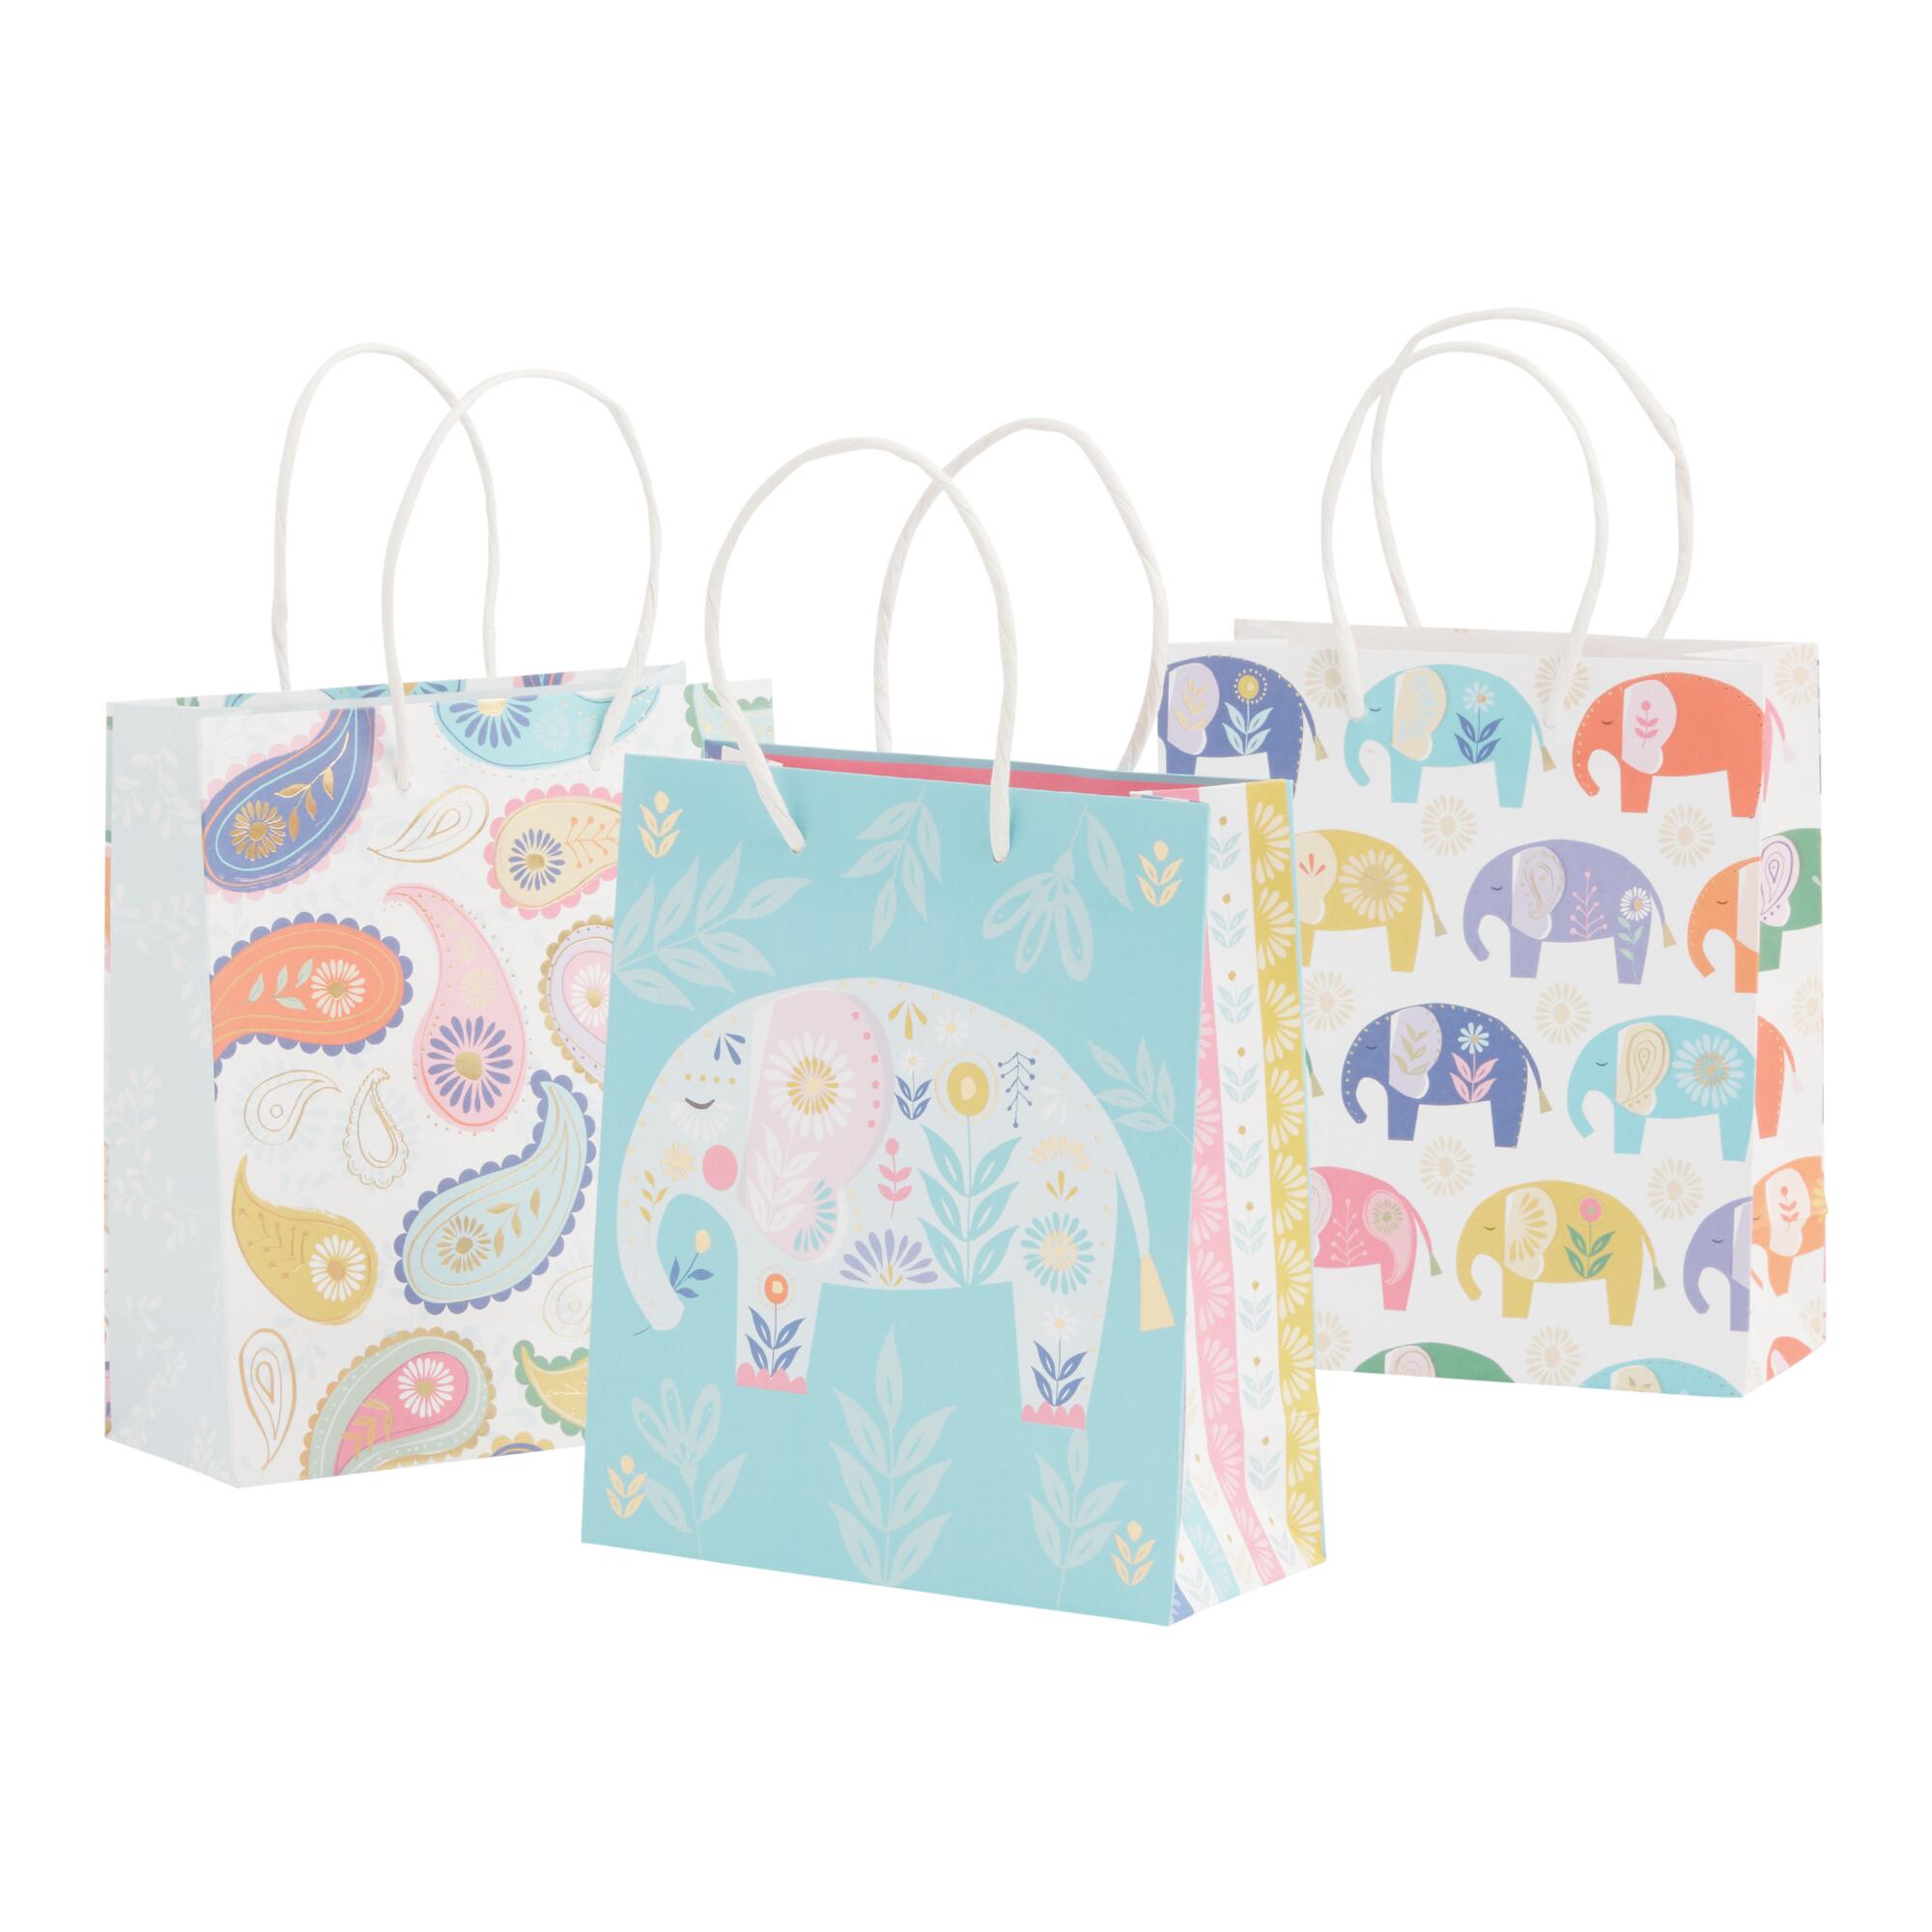 3 Pack Small Meri Meri Paisley Elephant Gift Bags Set Of 2 by World Market